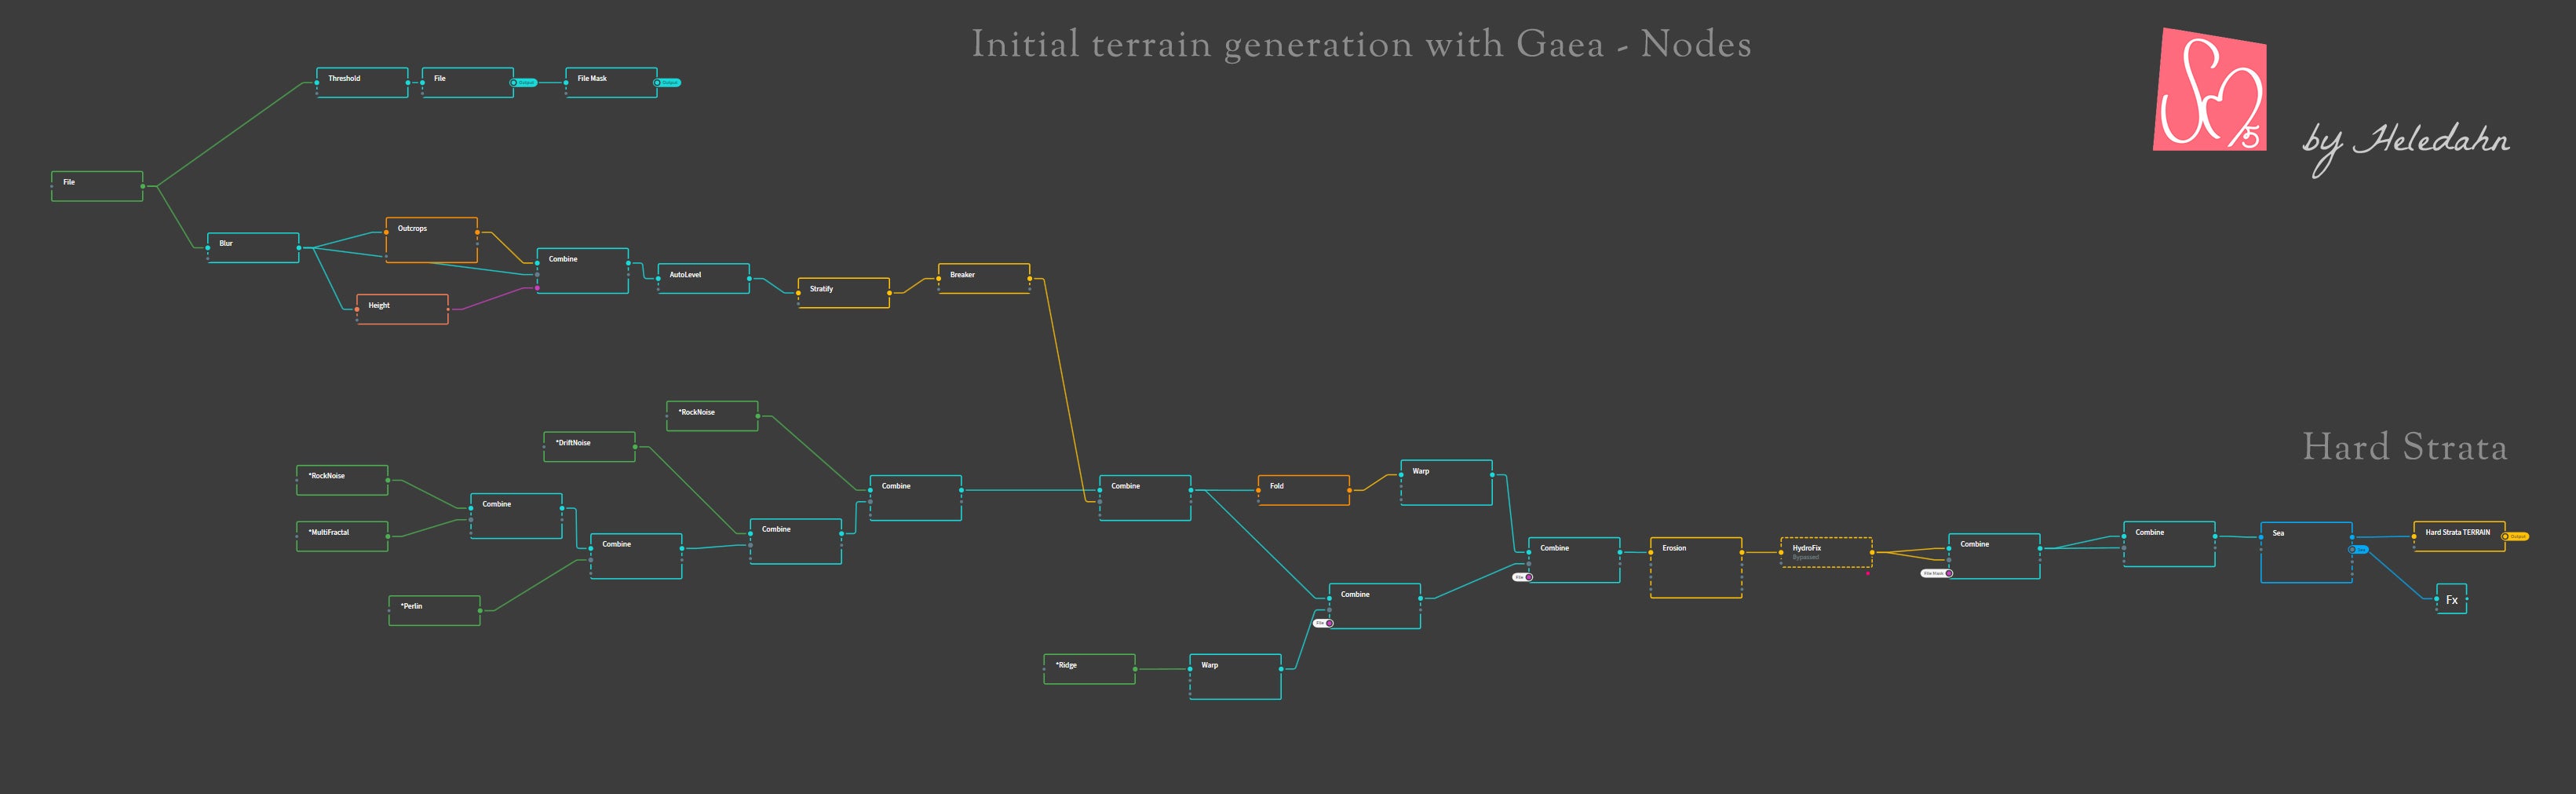 Gaea terrain nodes for creating hard strata terrain, by Heledahn